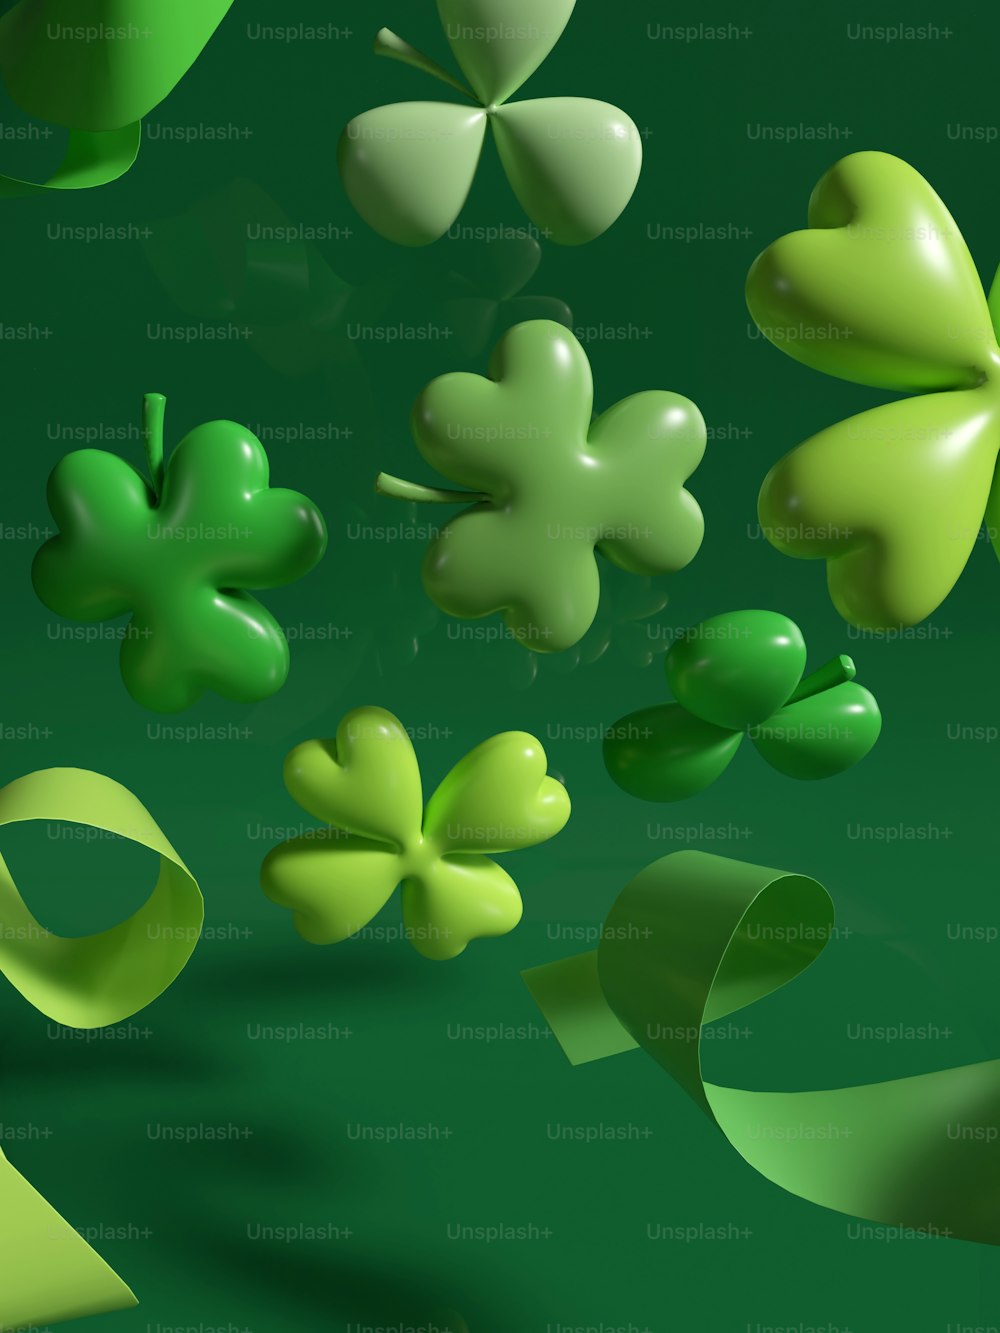 Un montón de tréboles verdes flotando en el aire